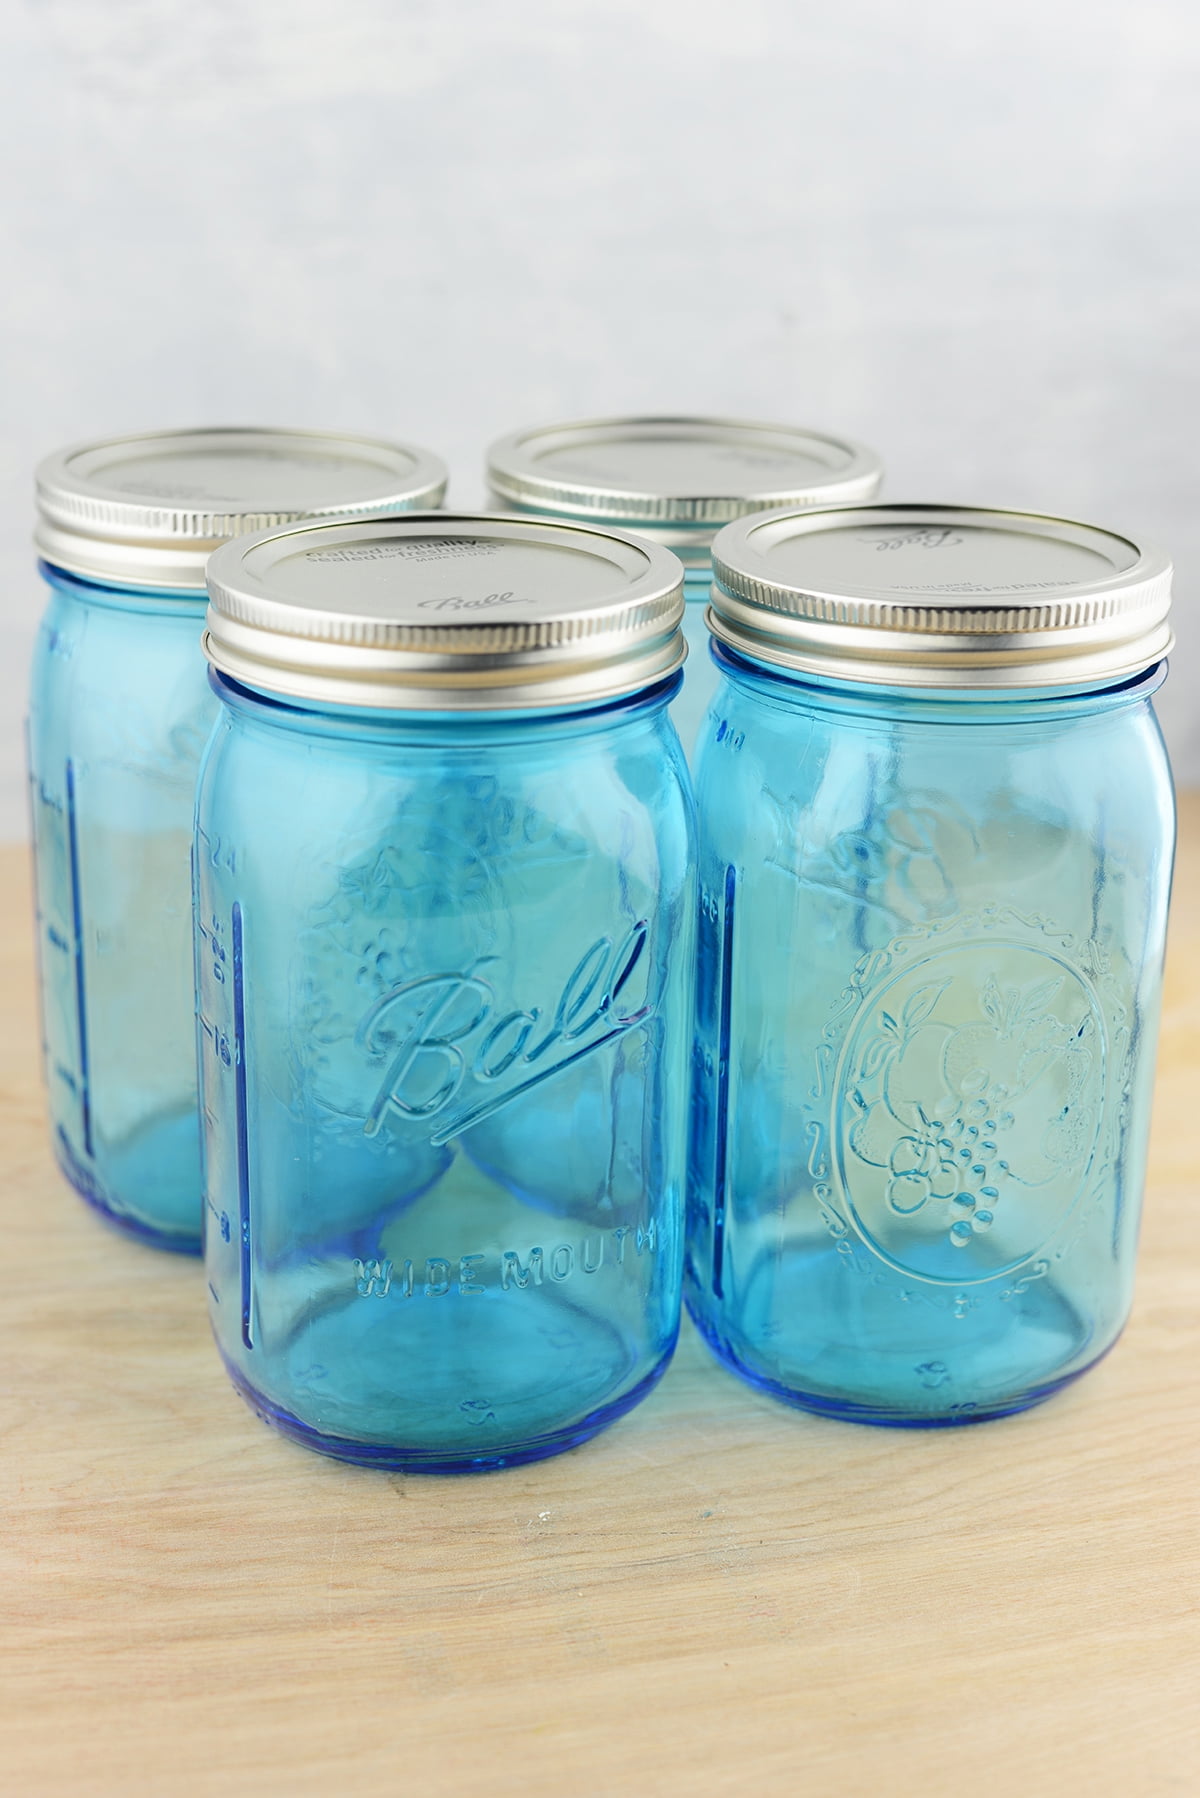 mason-jars-4-16-oz-blue-wide-mouth-jars-wide-mouth-blue-glass-quart-size-mason-jars-6-5in